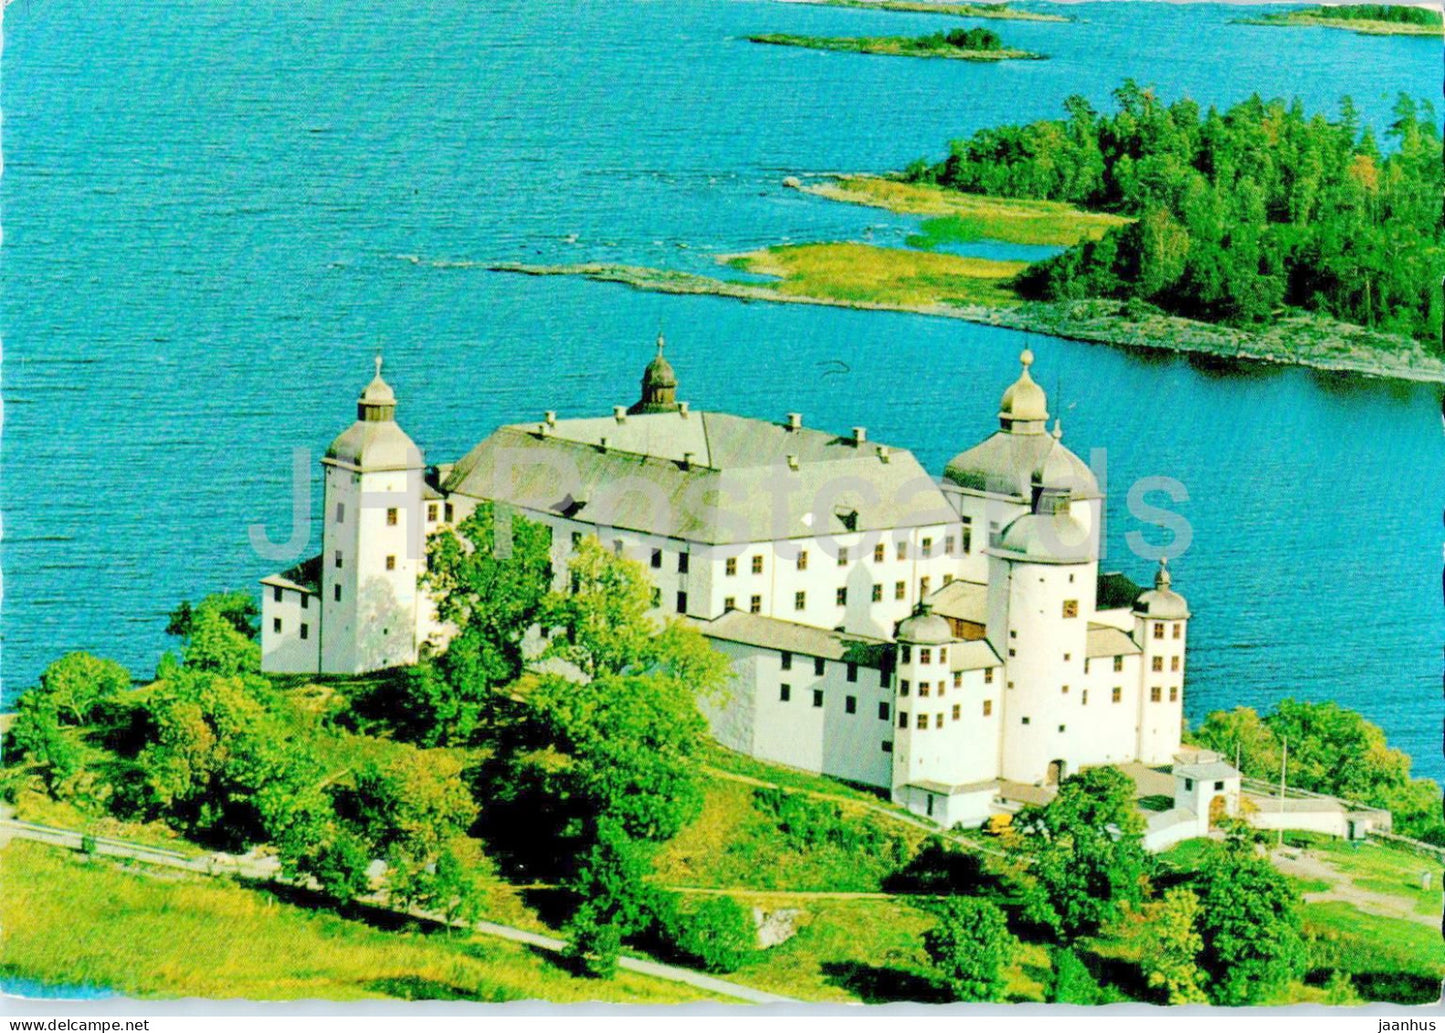 Lacko Slott - castle - Sweden - unused - JH Postcards